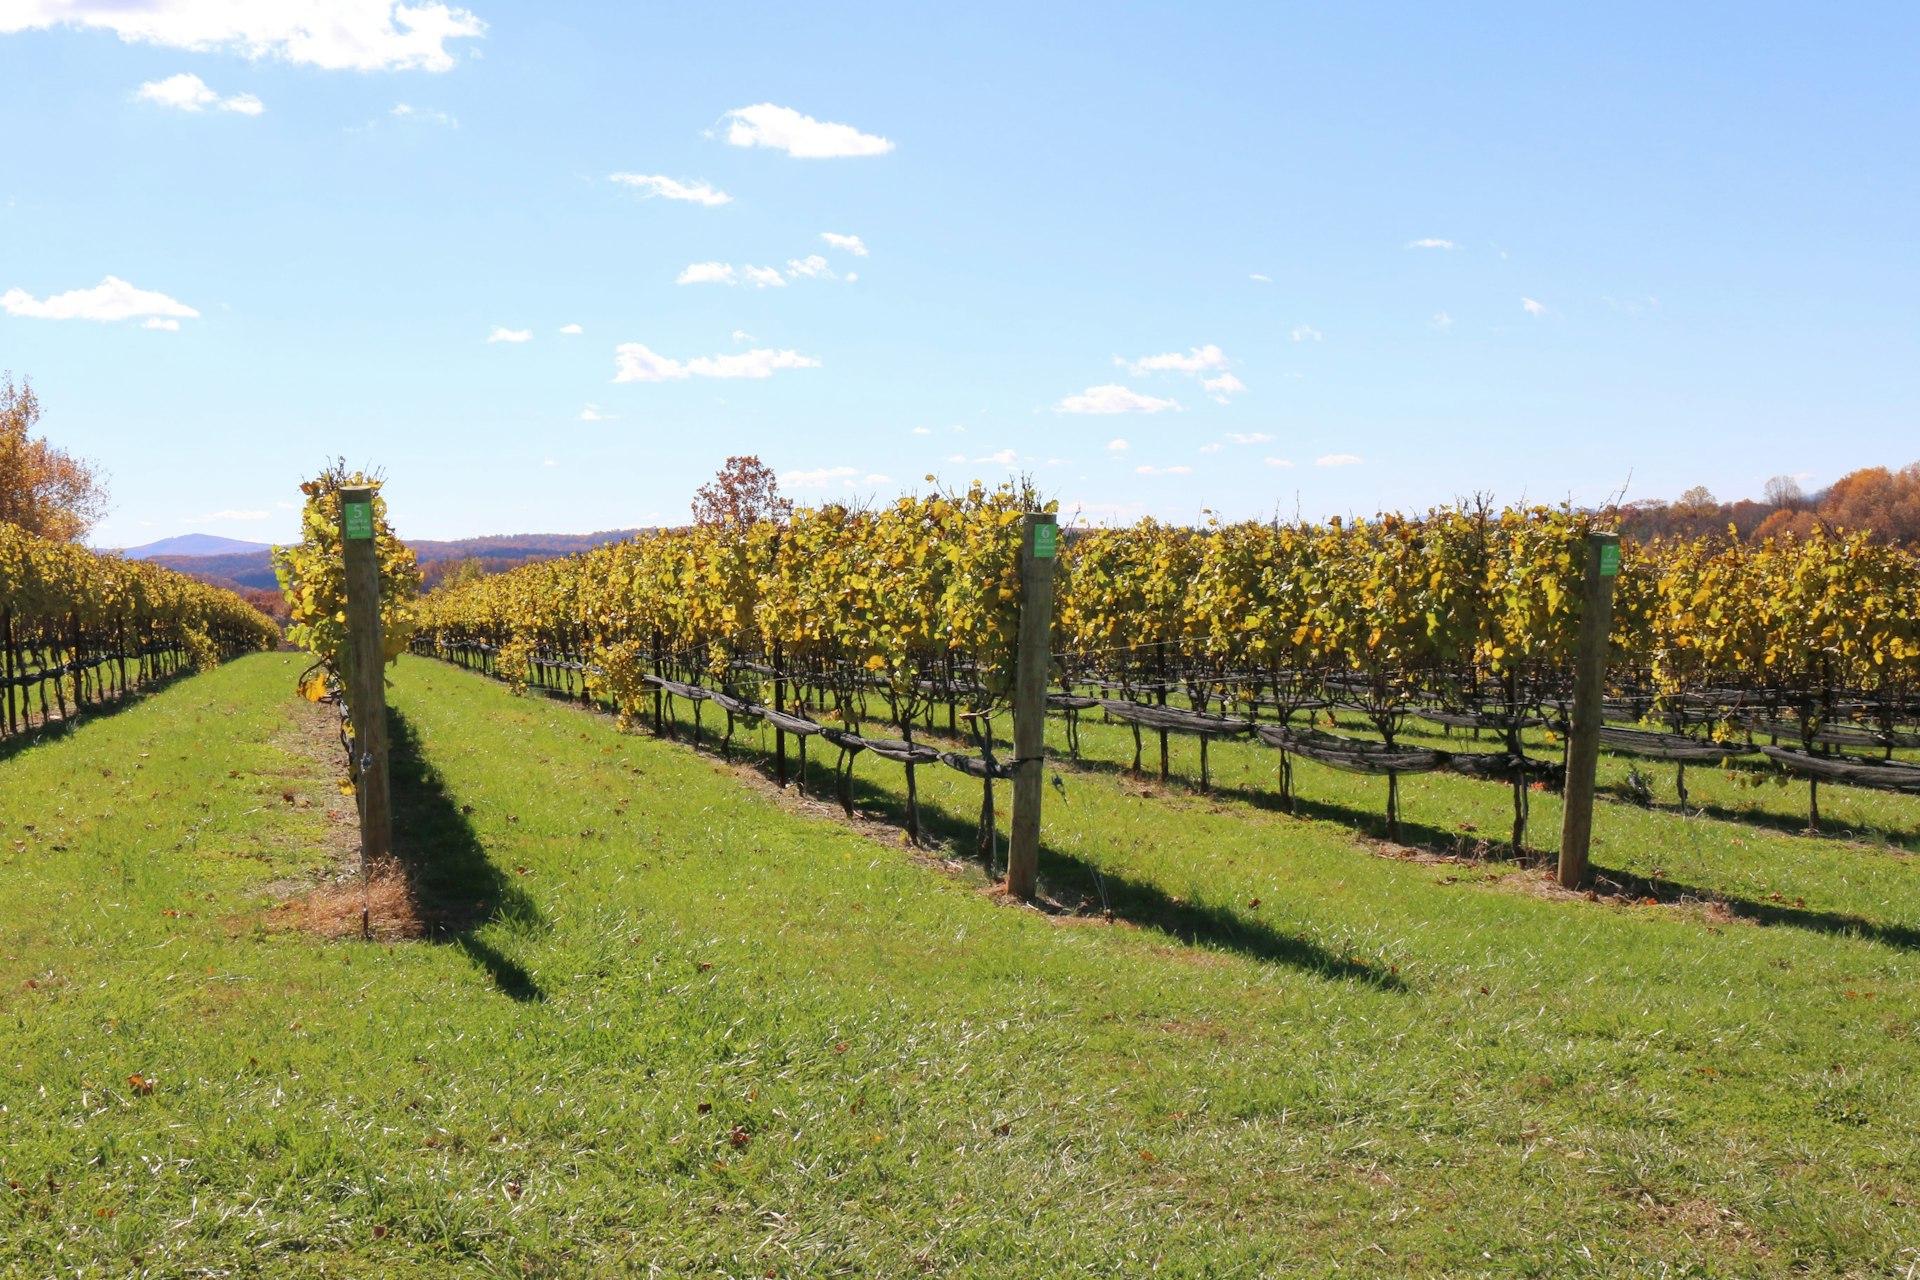 Rows of green vineyards